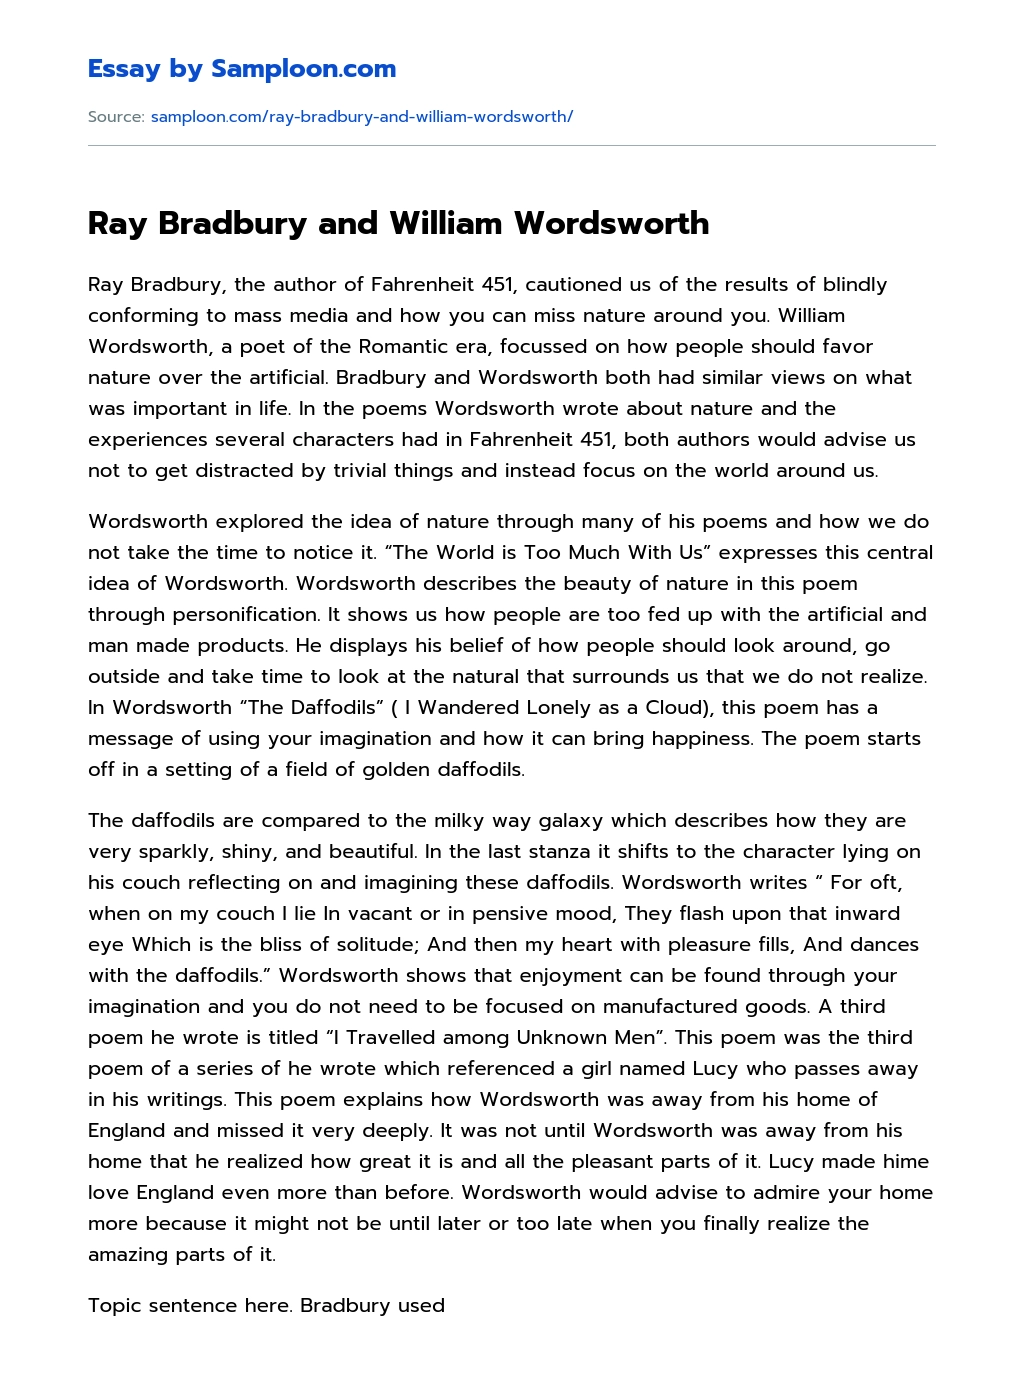 Ray Bradbury and William Wordsworth essay